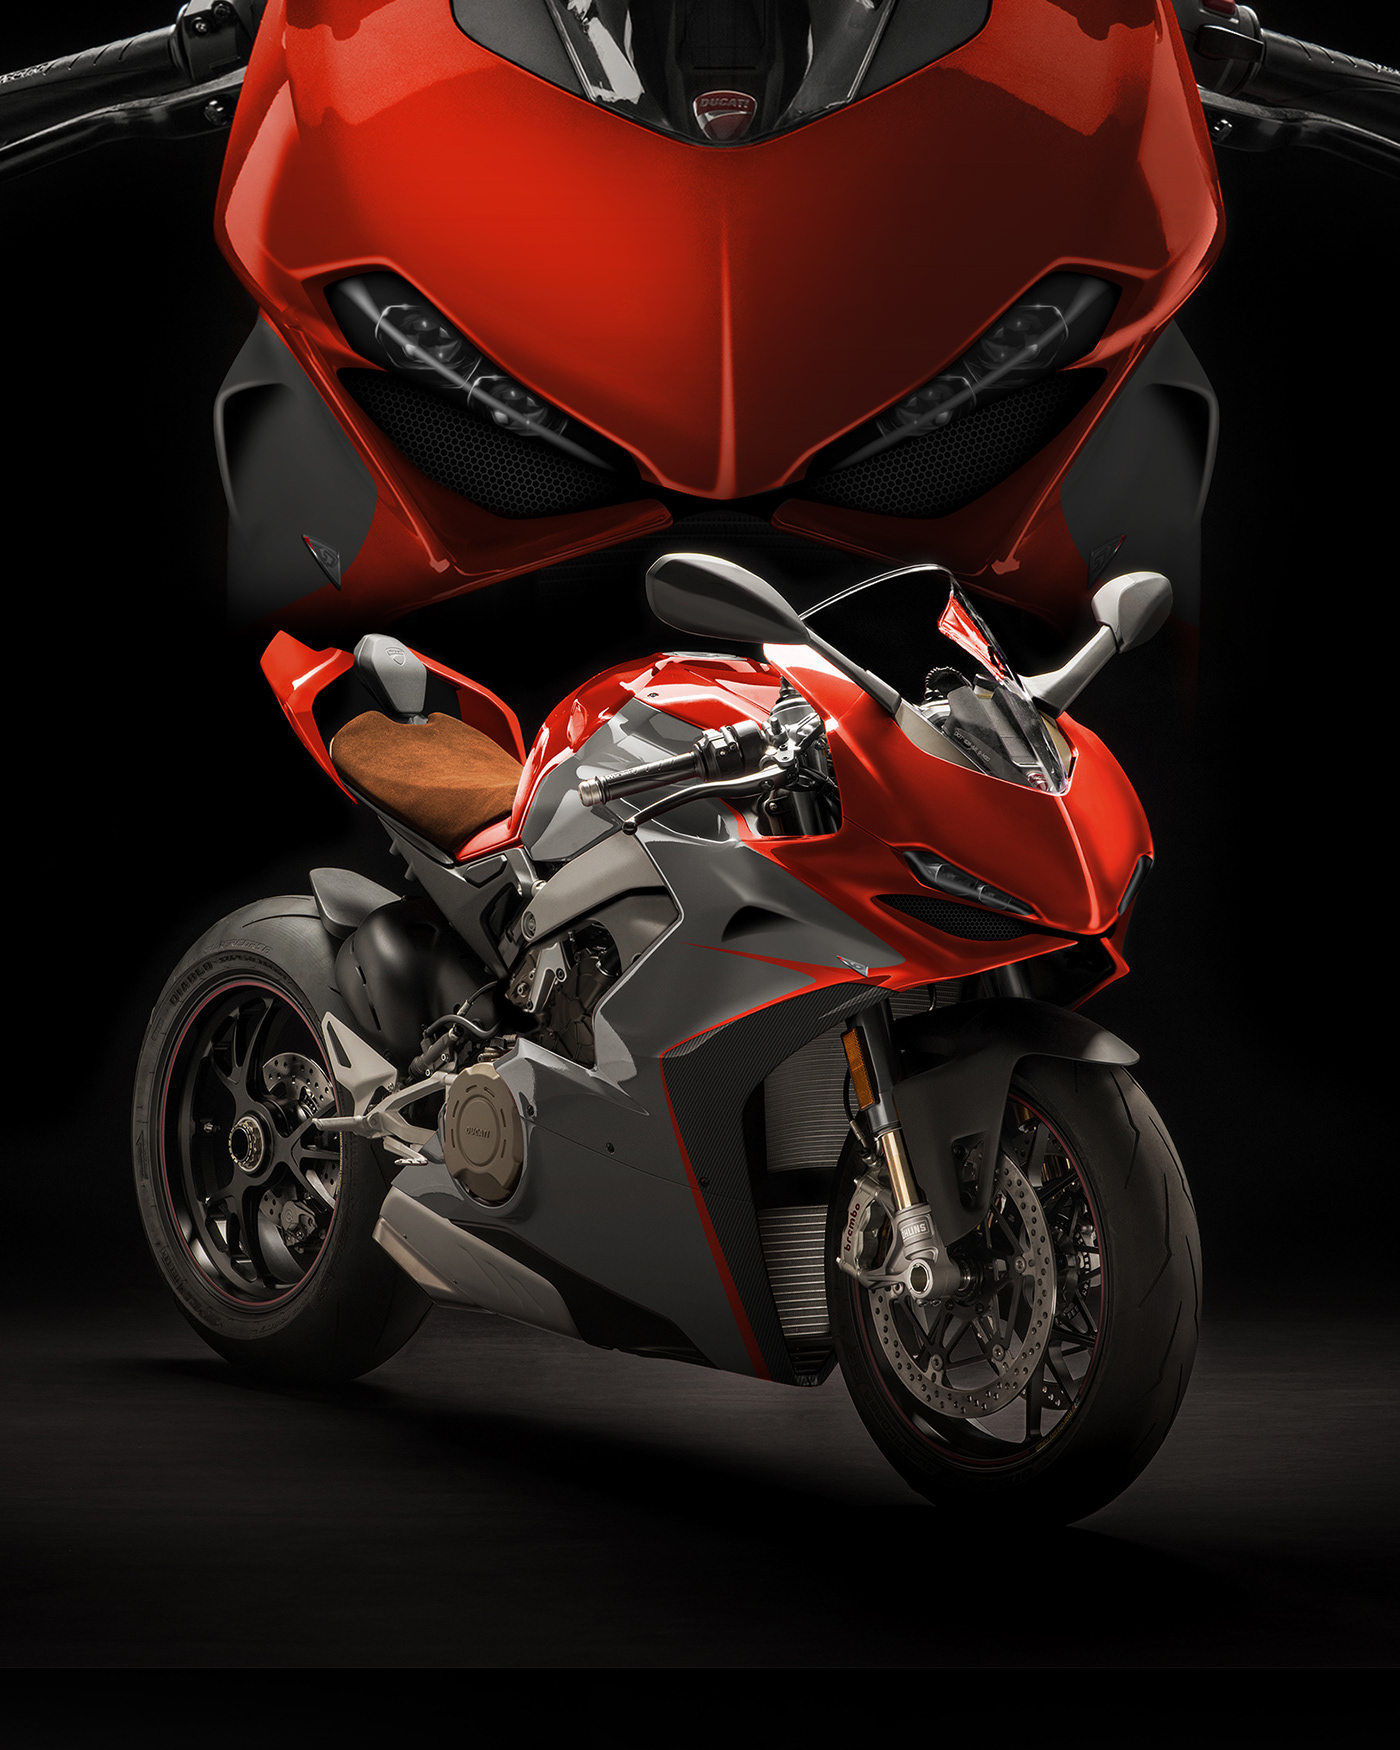 Simon Designs designer motorcycle art Ducati NEW DESIGN aerodynamica Ducati Panigale panigale aria